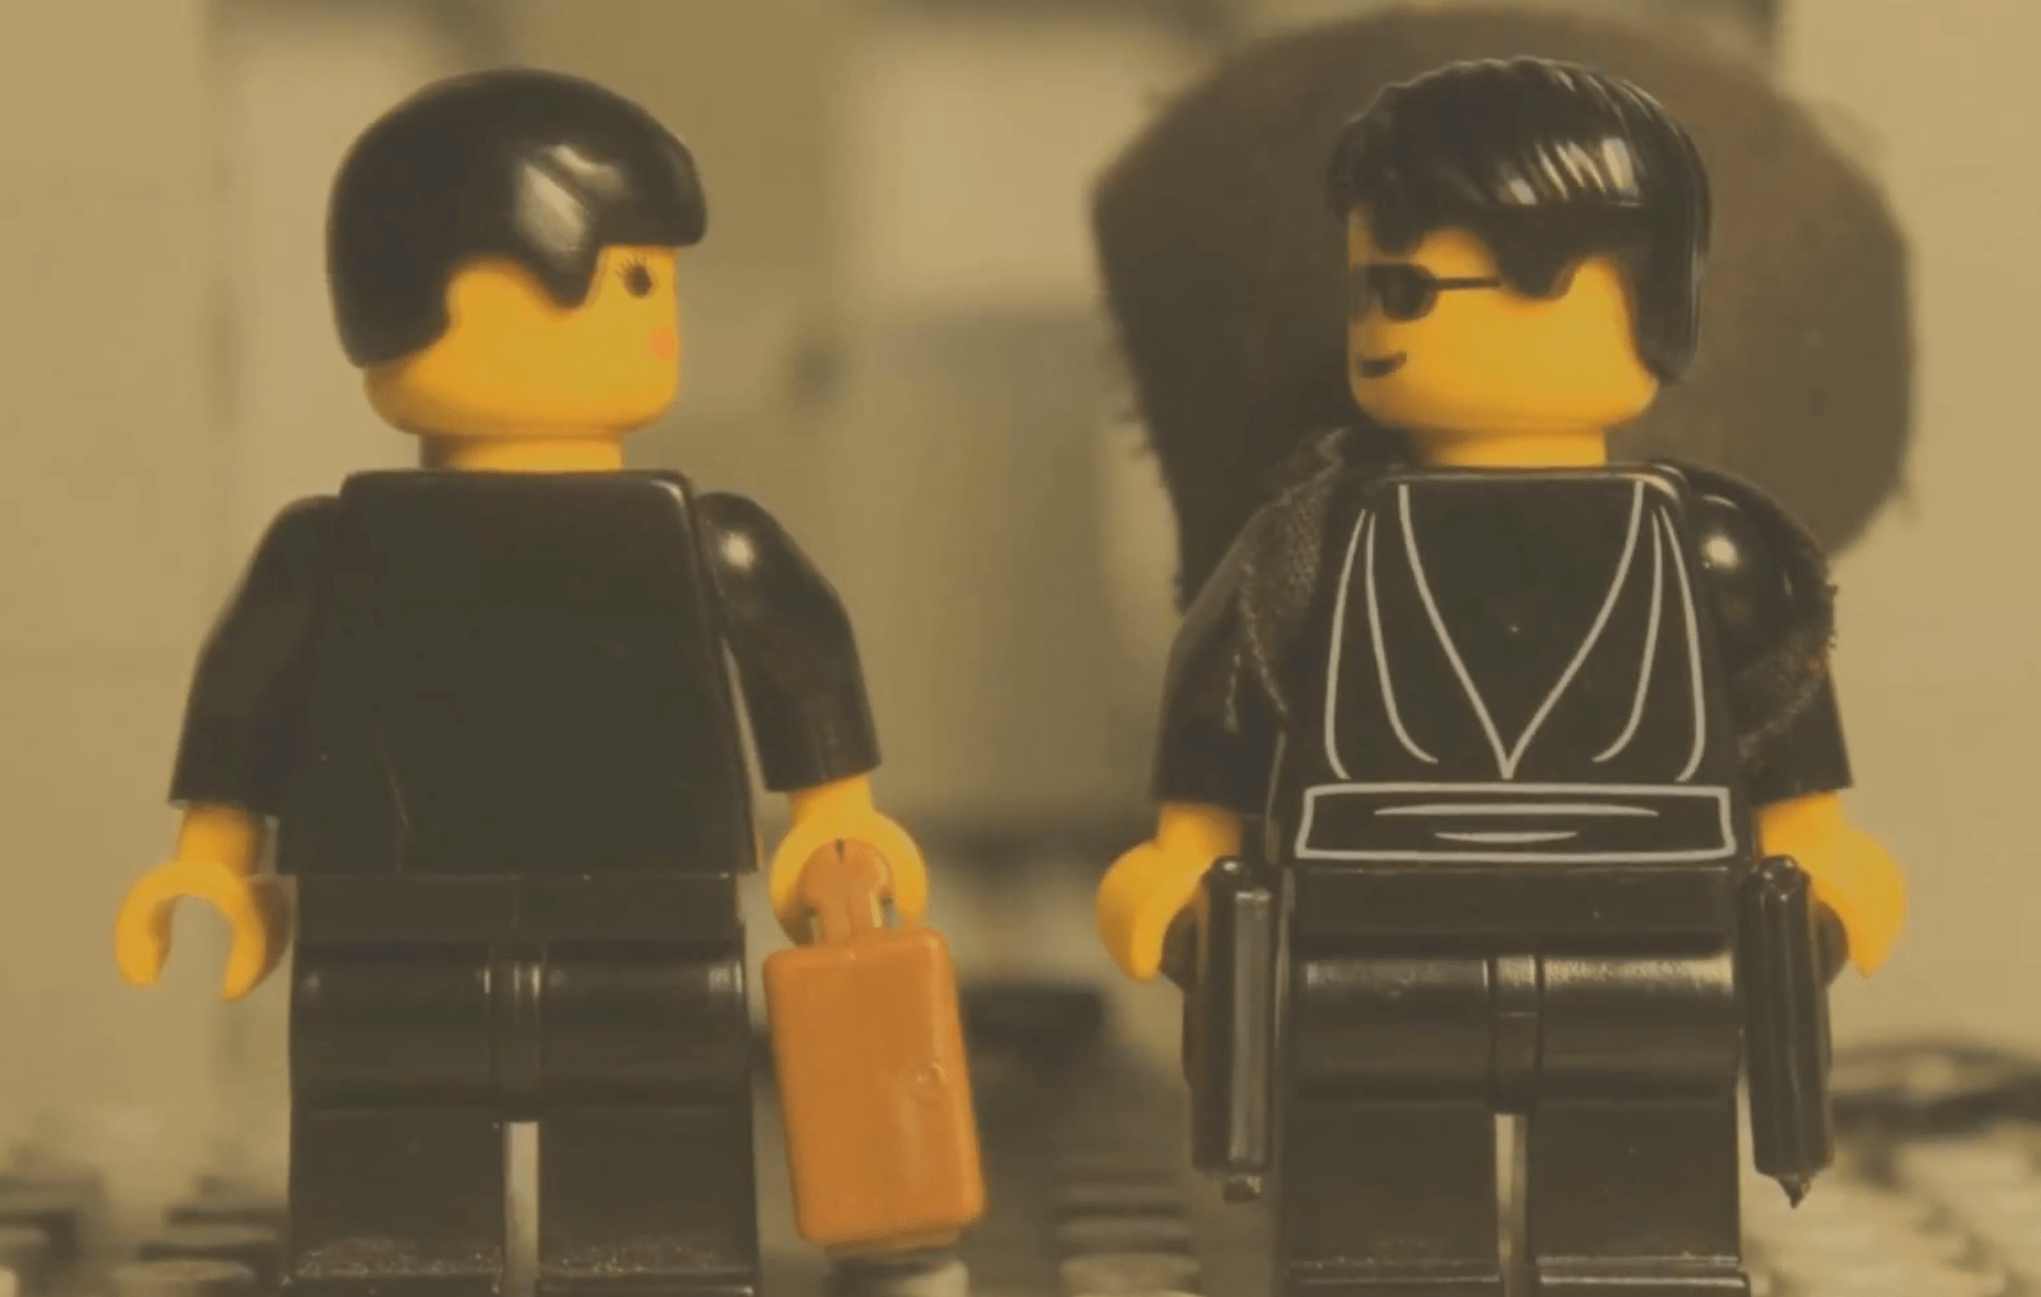 Lego Matrix Lobby Scene